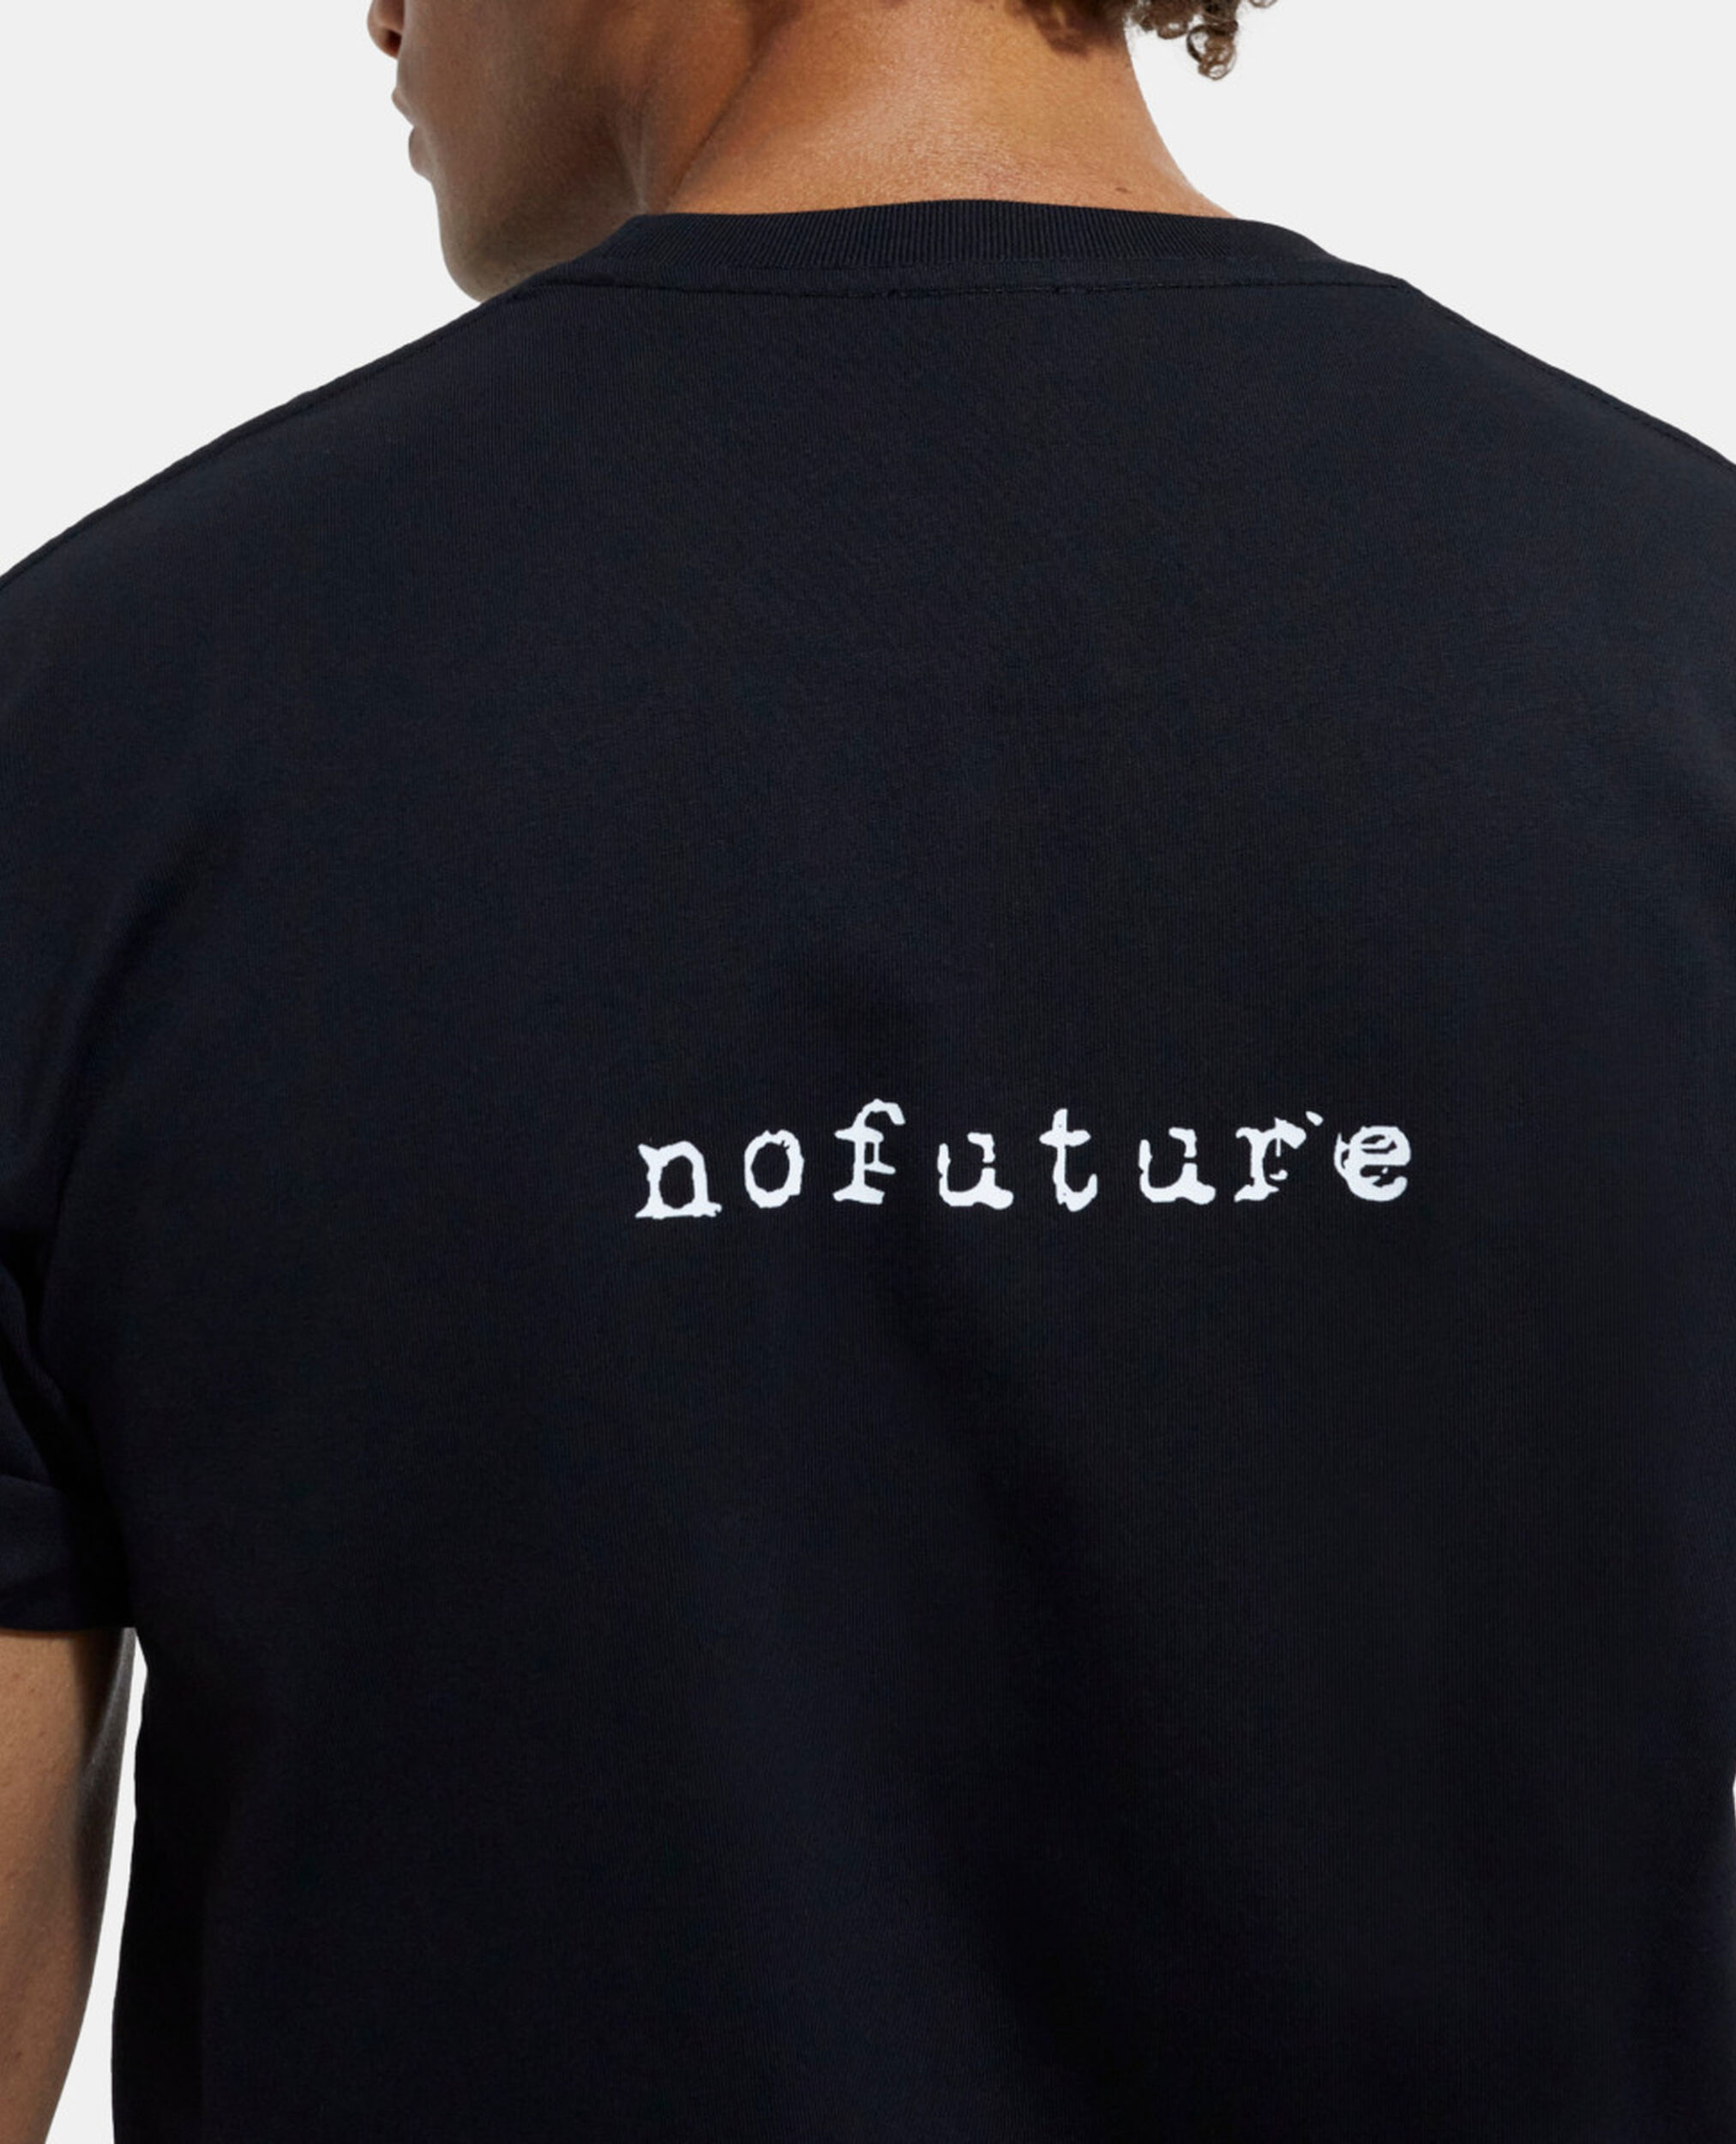 T-shirt logo #nokooplesnofuture noir, BLACK, hi-res image number null